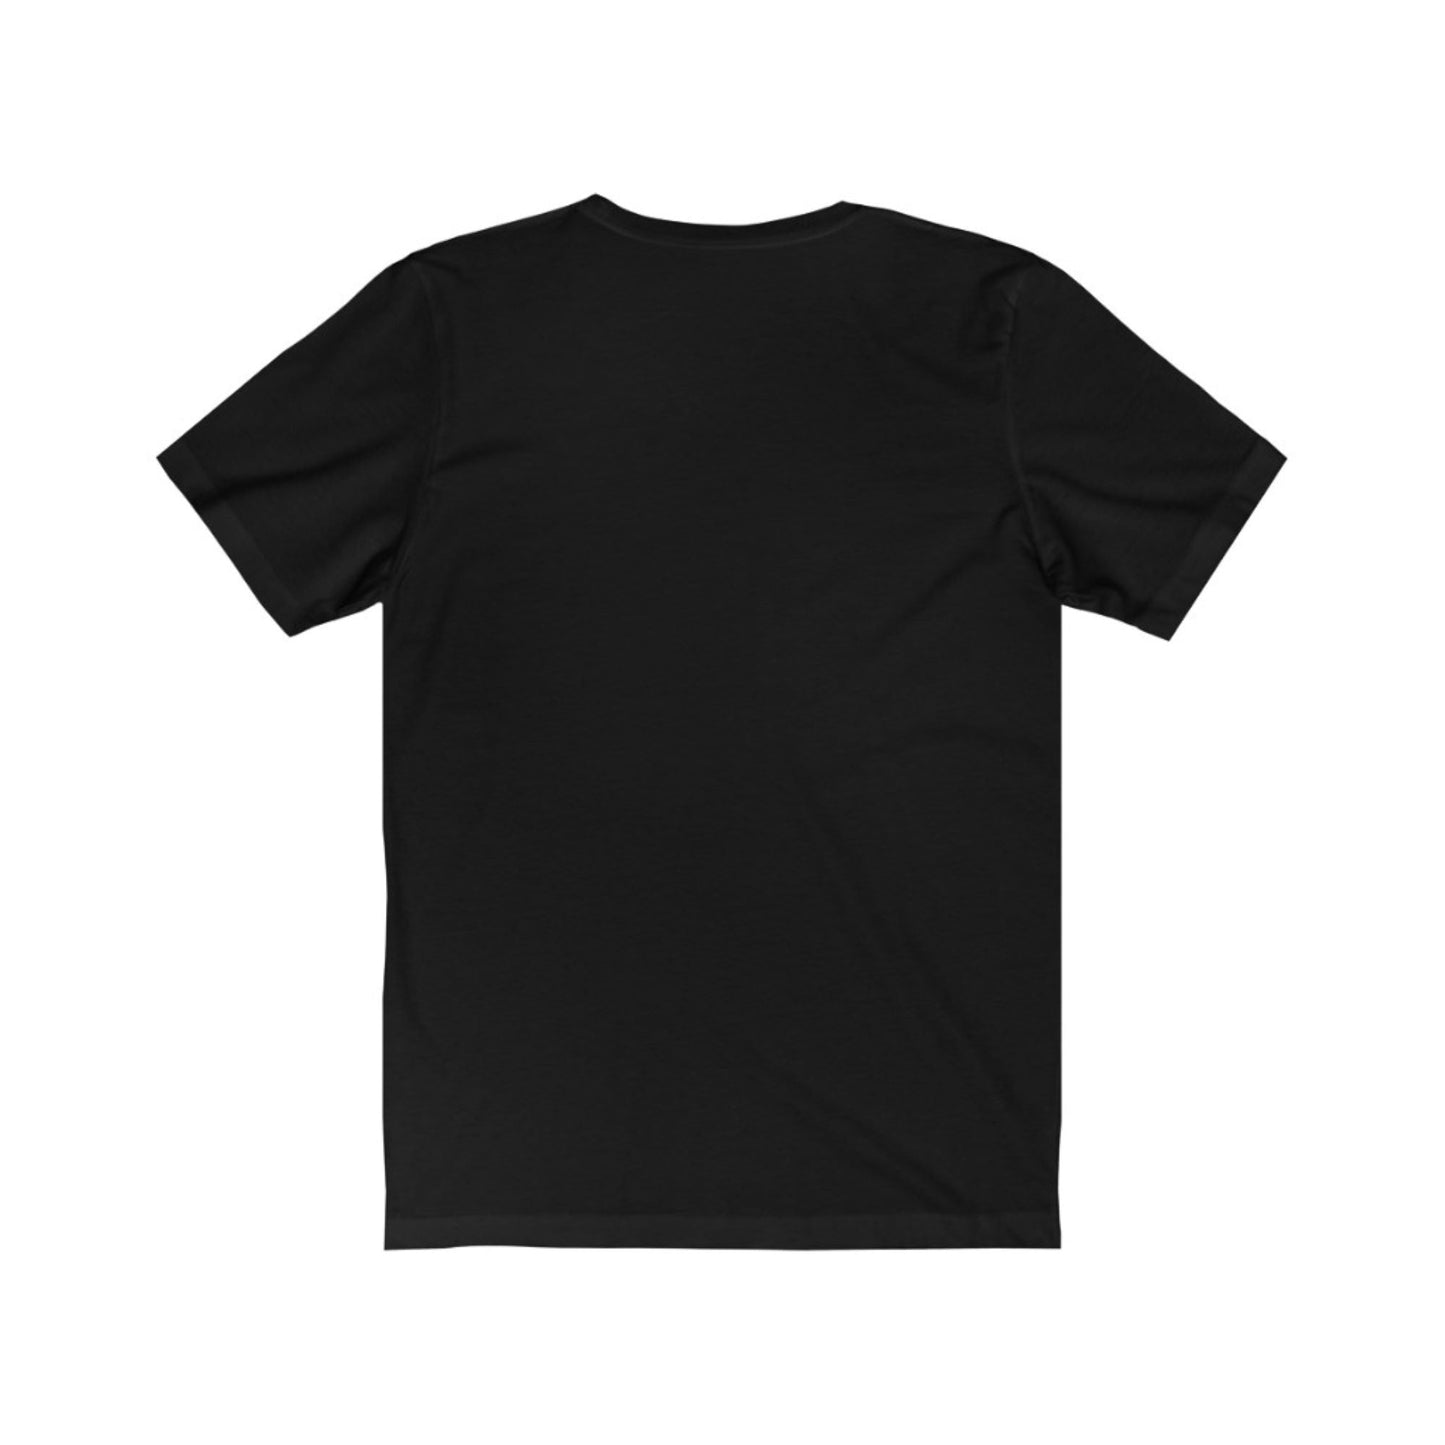 T-Shirt Tshirt Design Gift for Friend and Family Short Sleeved Shirt Geometric Design Petrova Designs